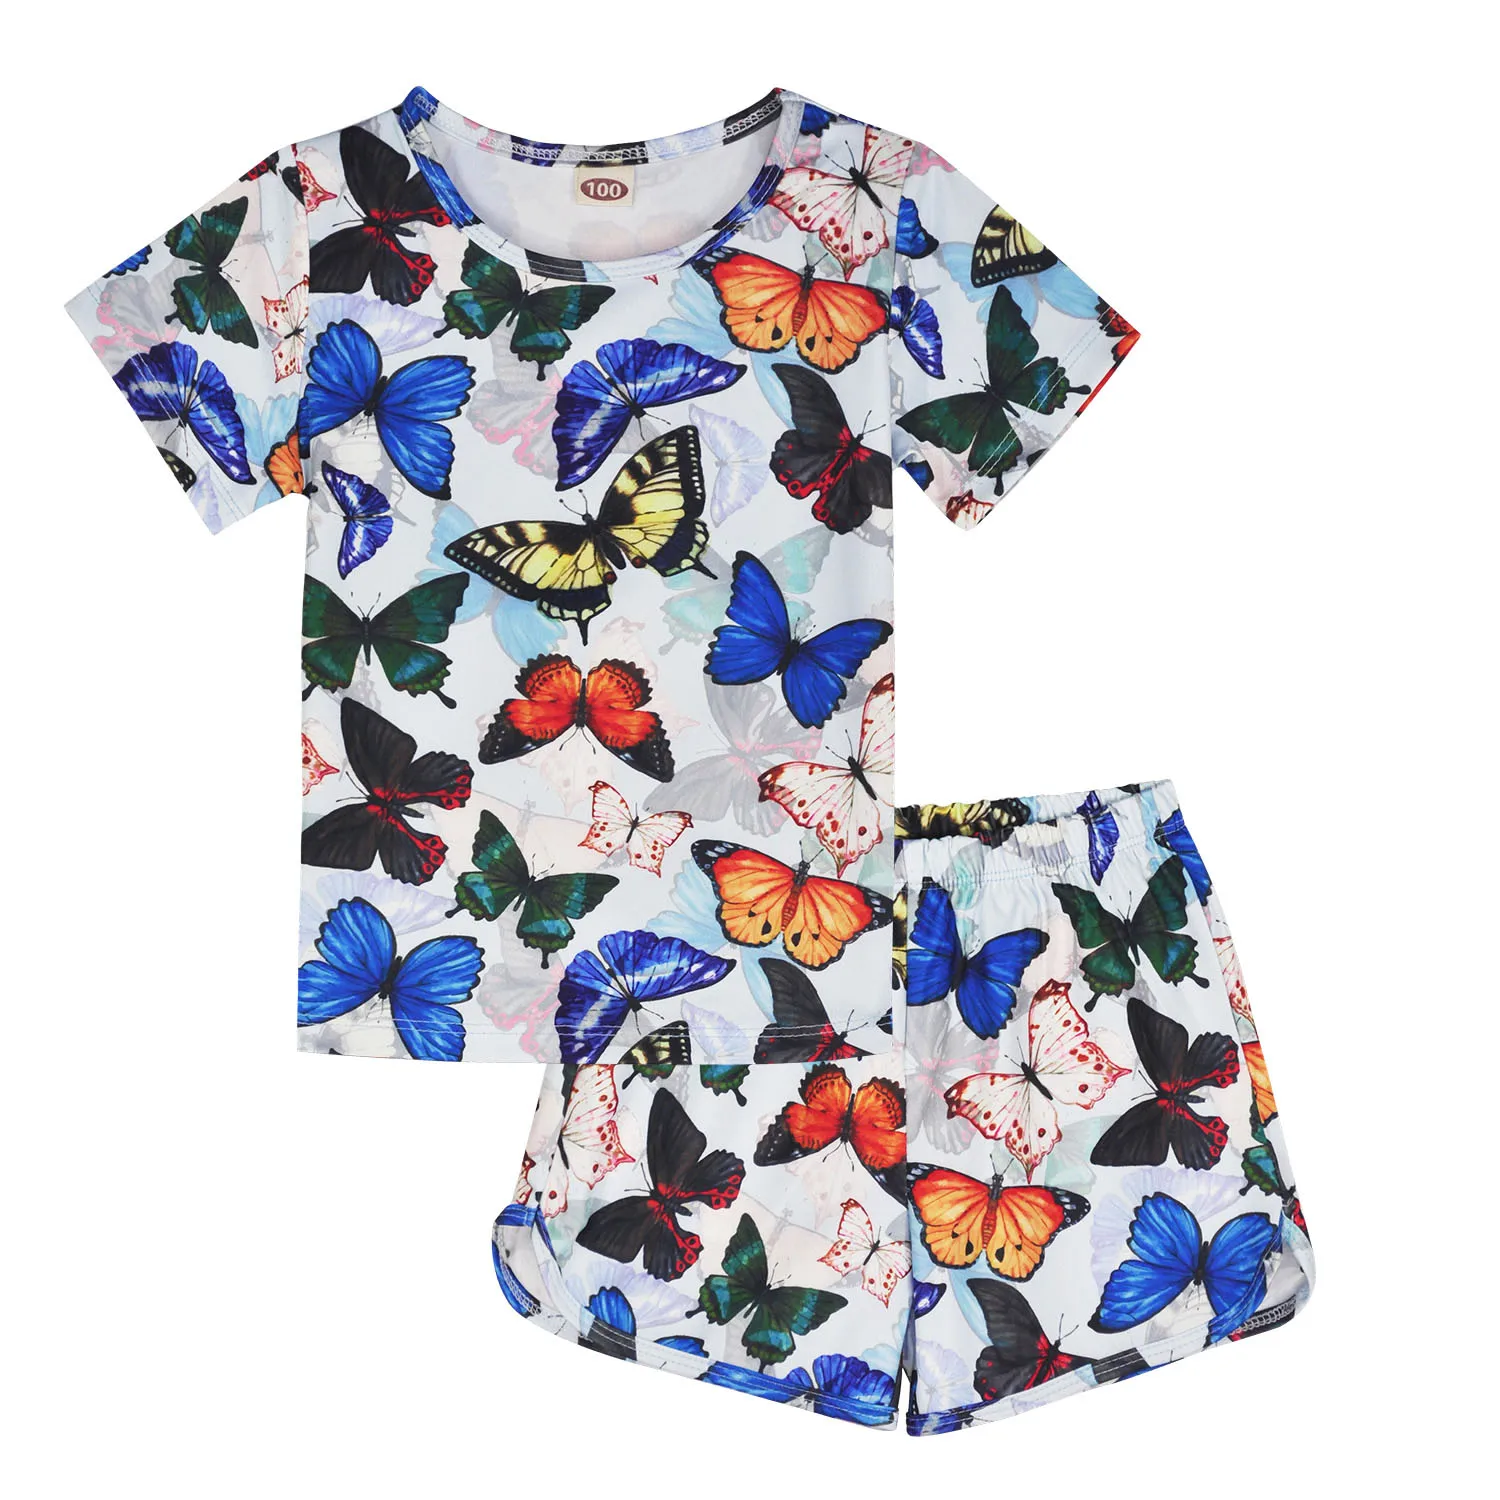 

ModaIOO Girls Pajamas Short Set Unicorn Dinosaur Butterfly Rainbow Top Tee Shirt Bottom Shorts 2 Pieces Sleepwears Sets